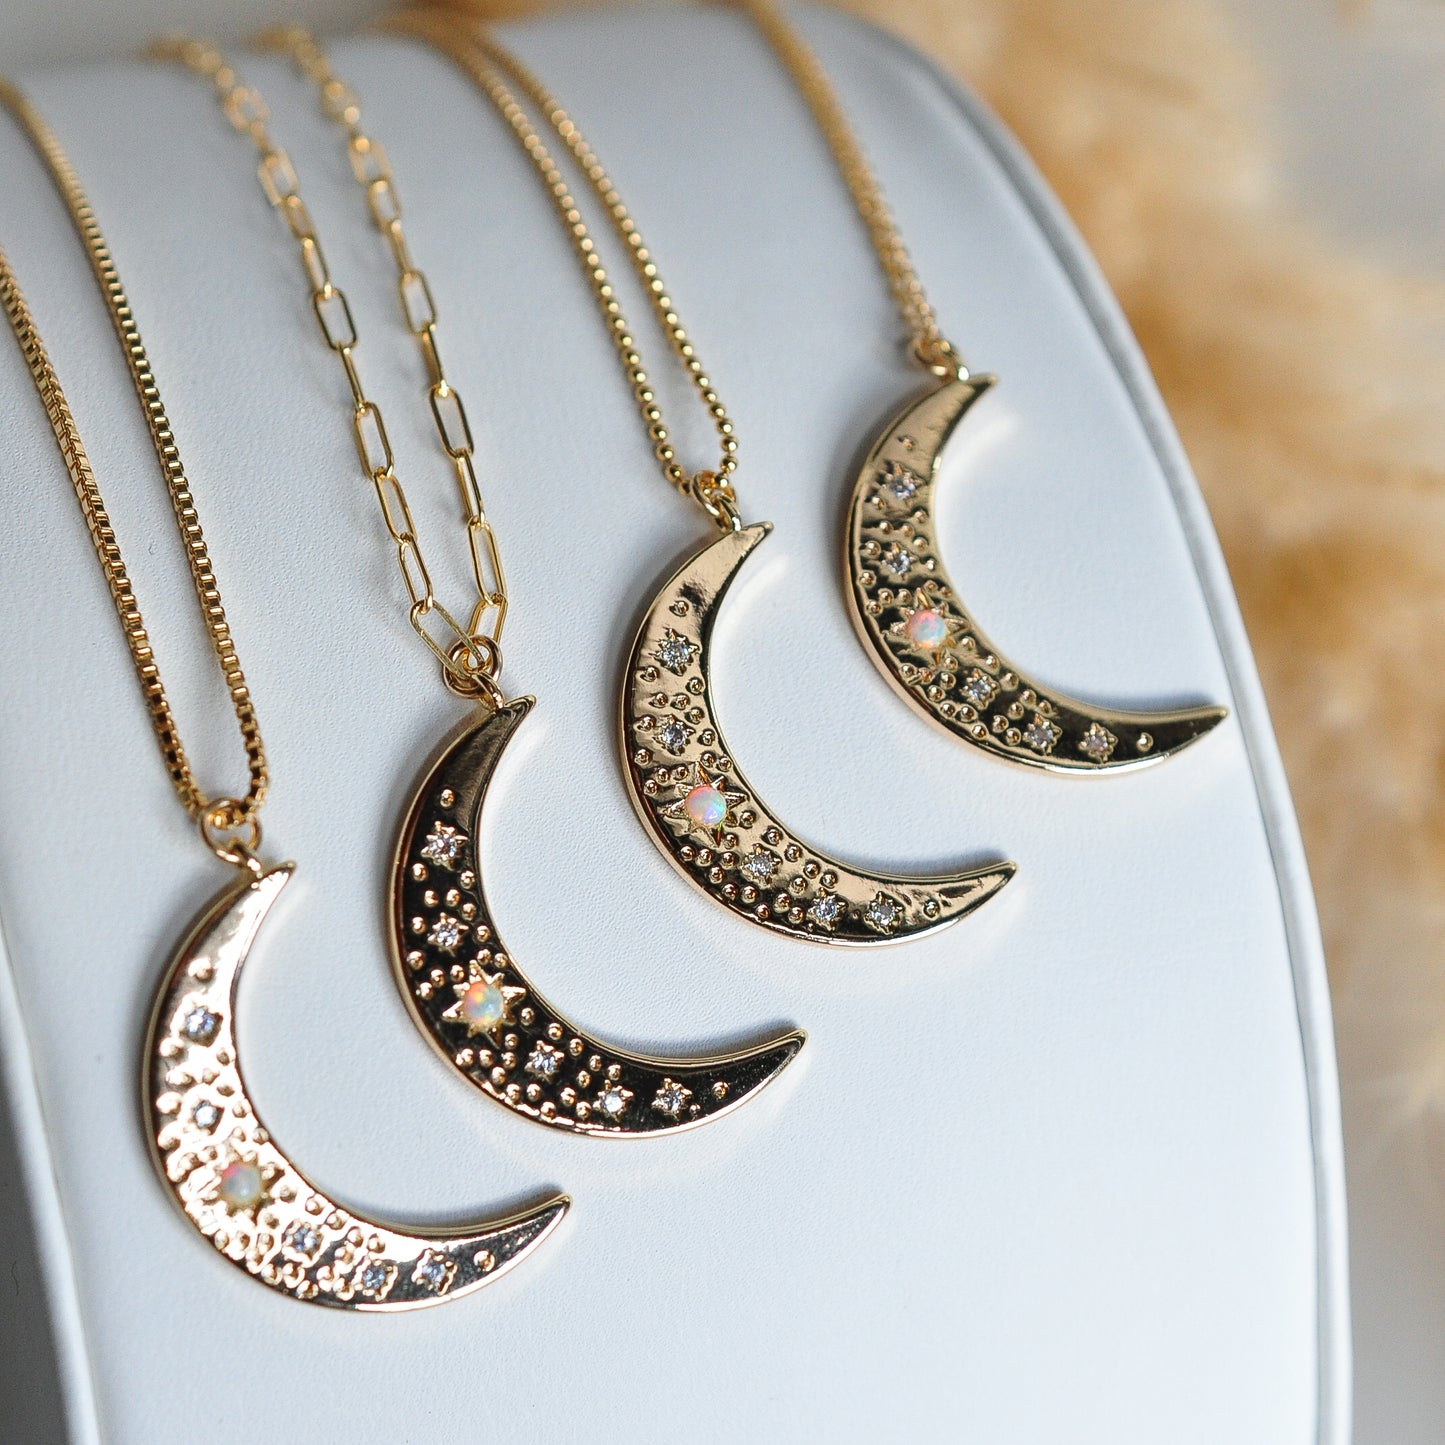 Embellished Moon Charm Necklace